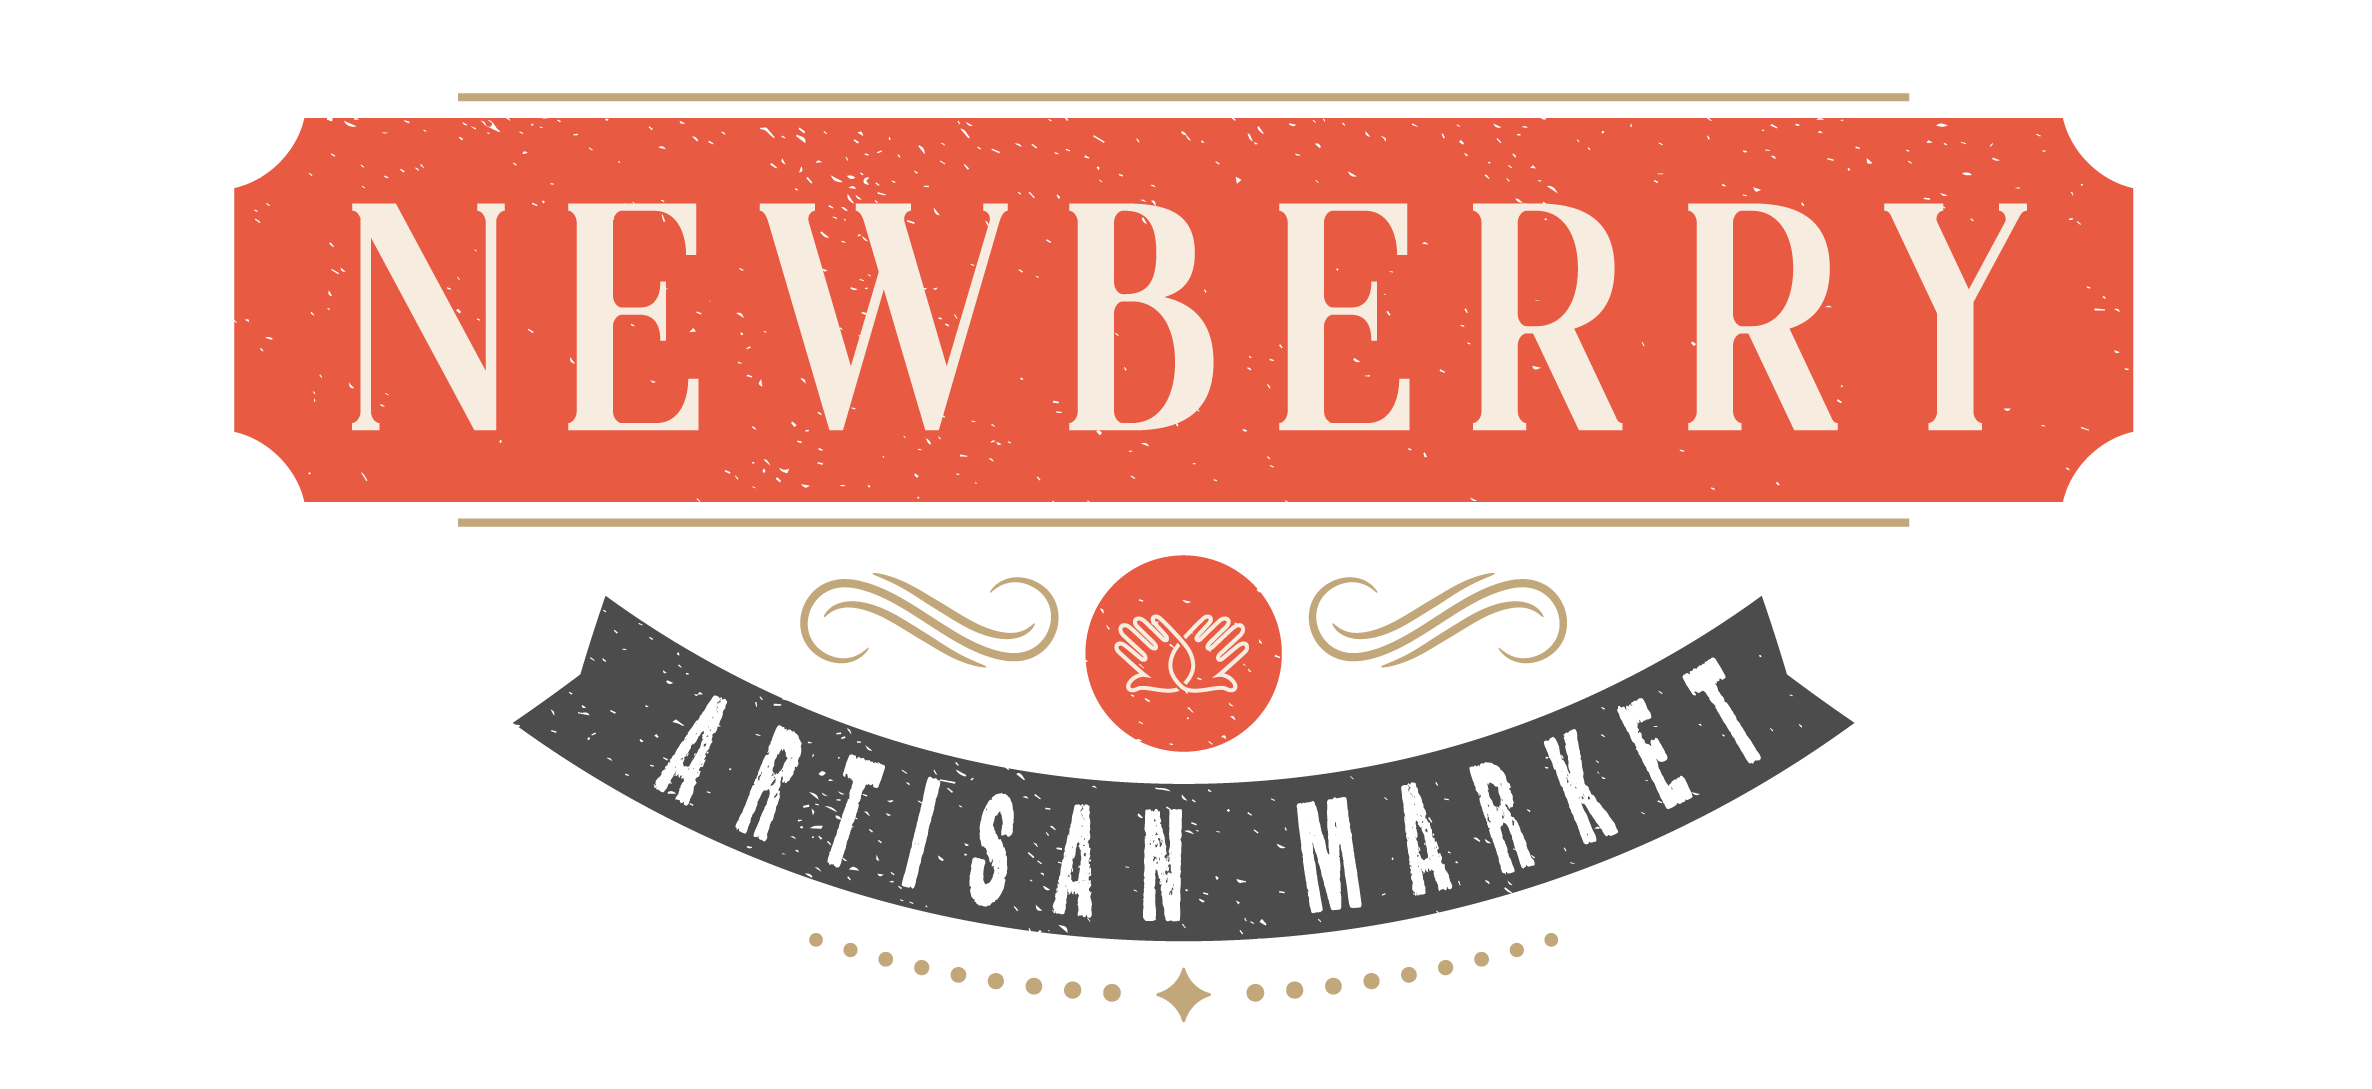 Newberry Artisan Market